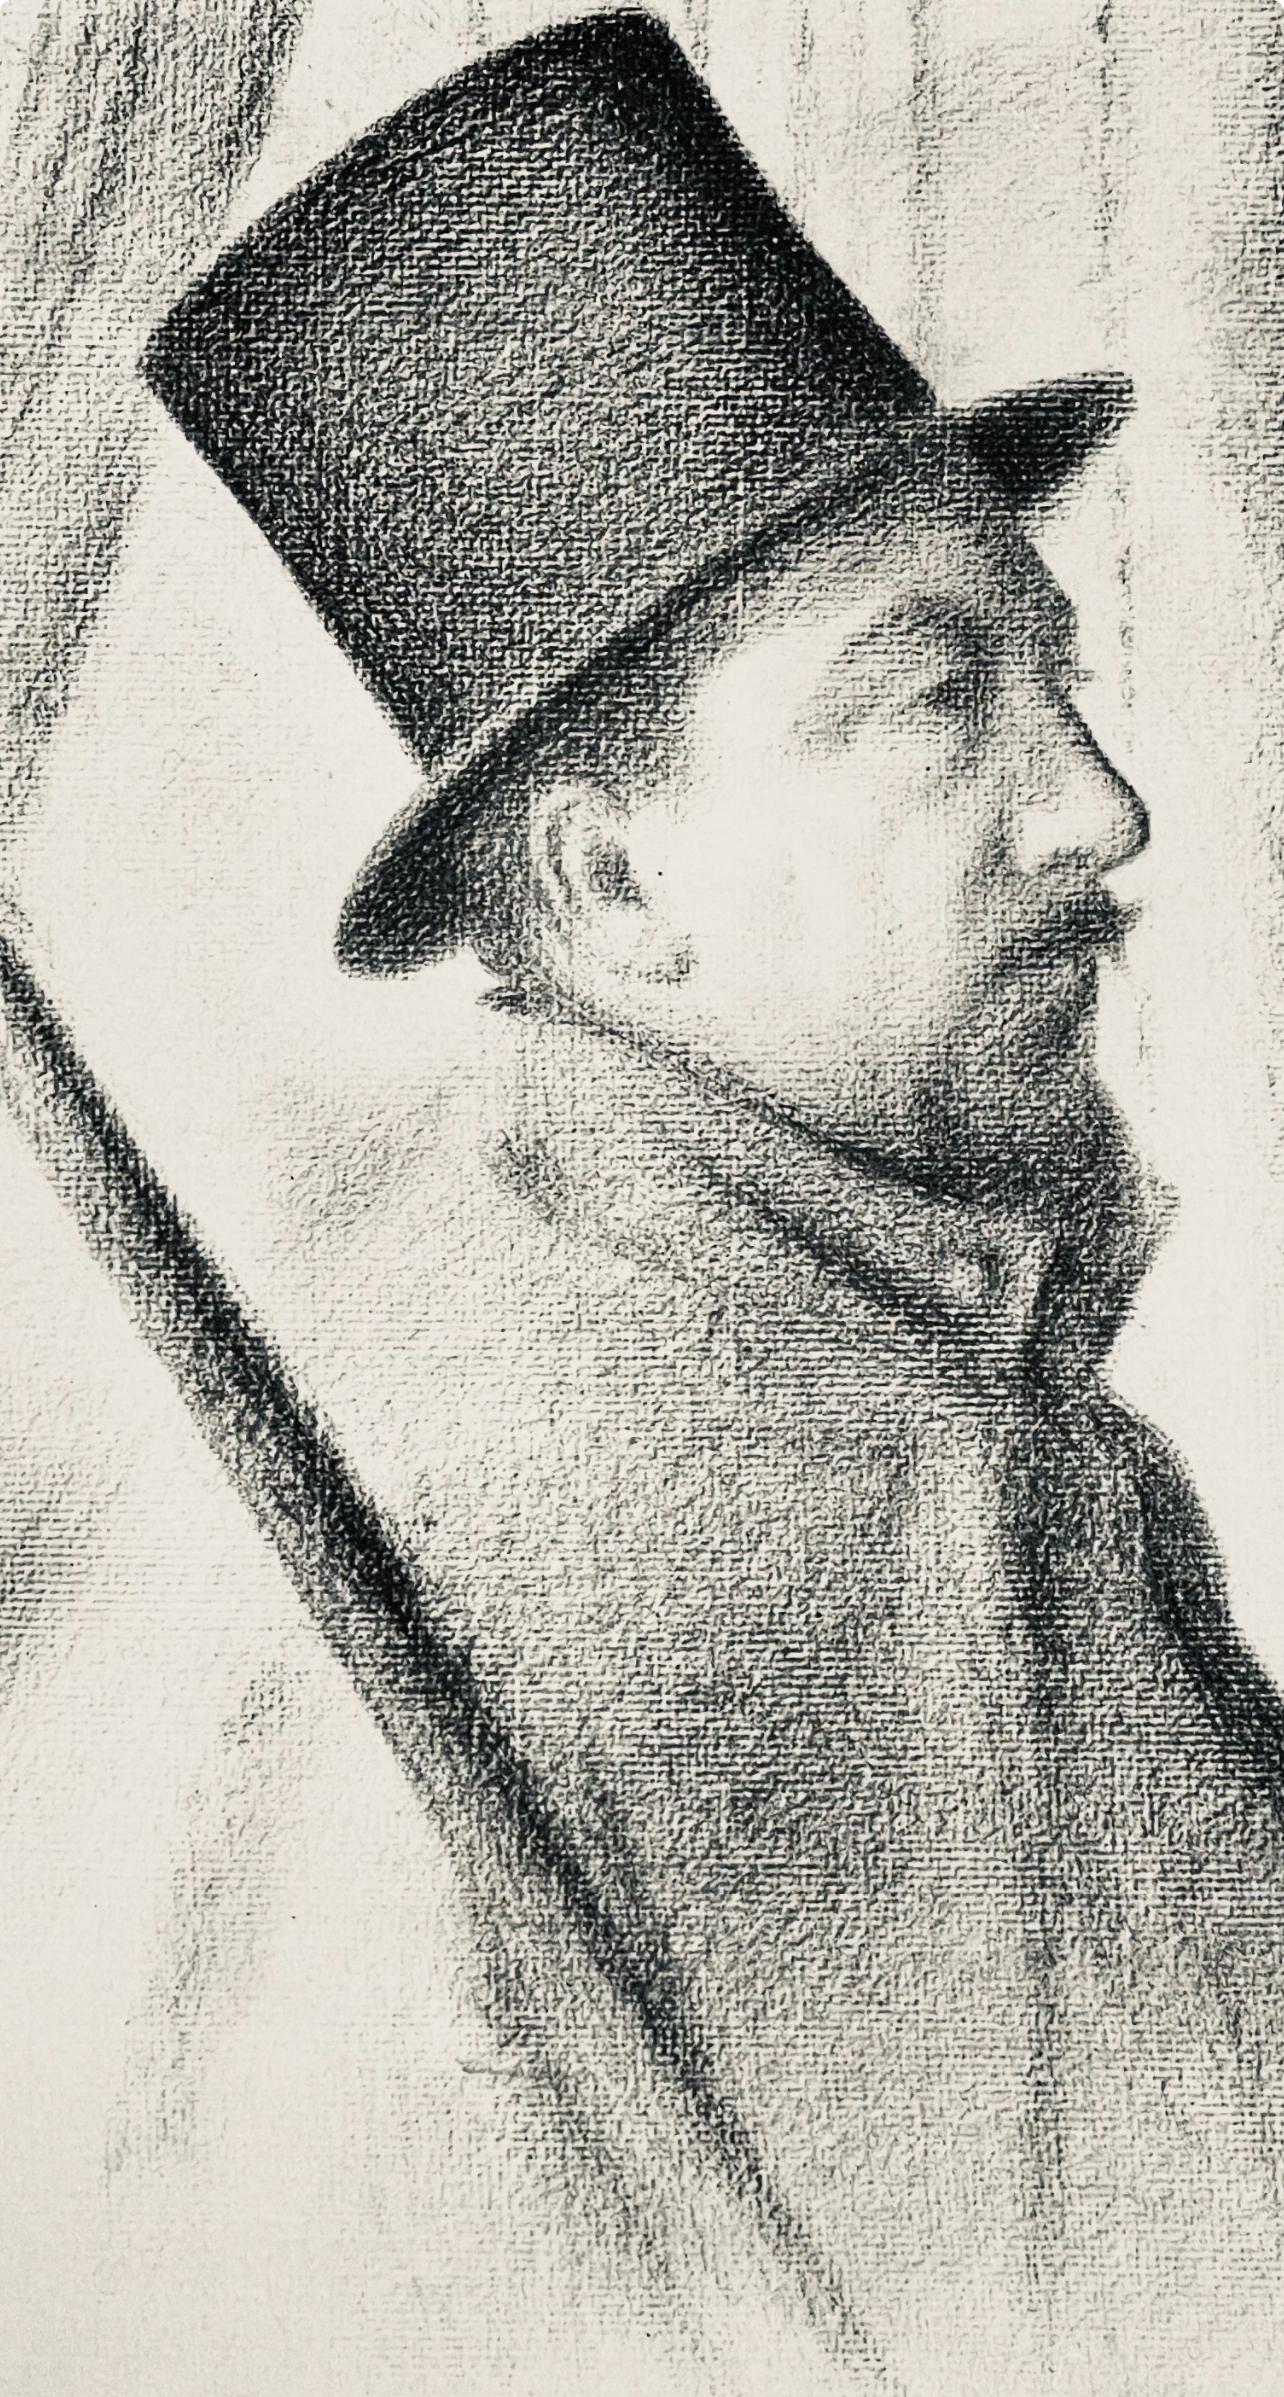 Seurat, Porträt von Paul Signac, Seurat (nach) – Print von Georges Seurat